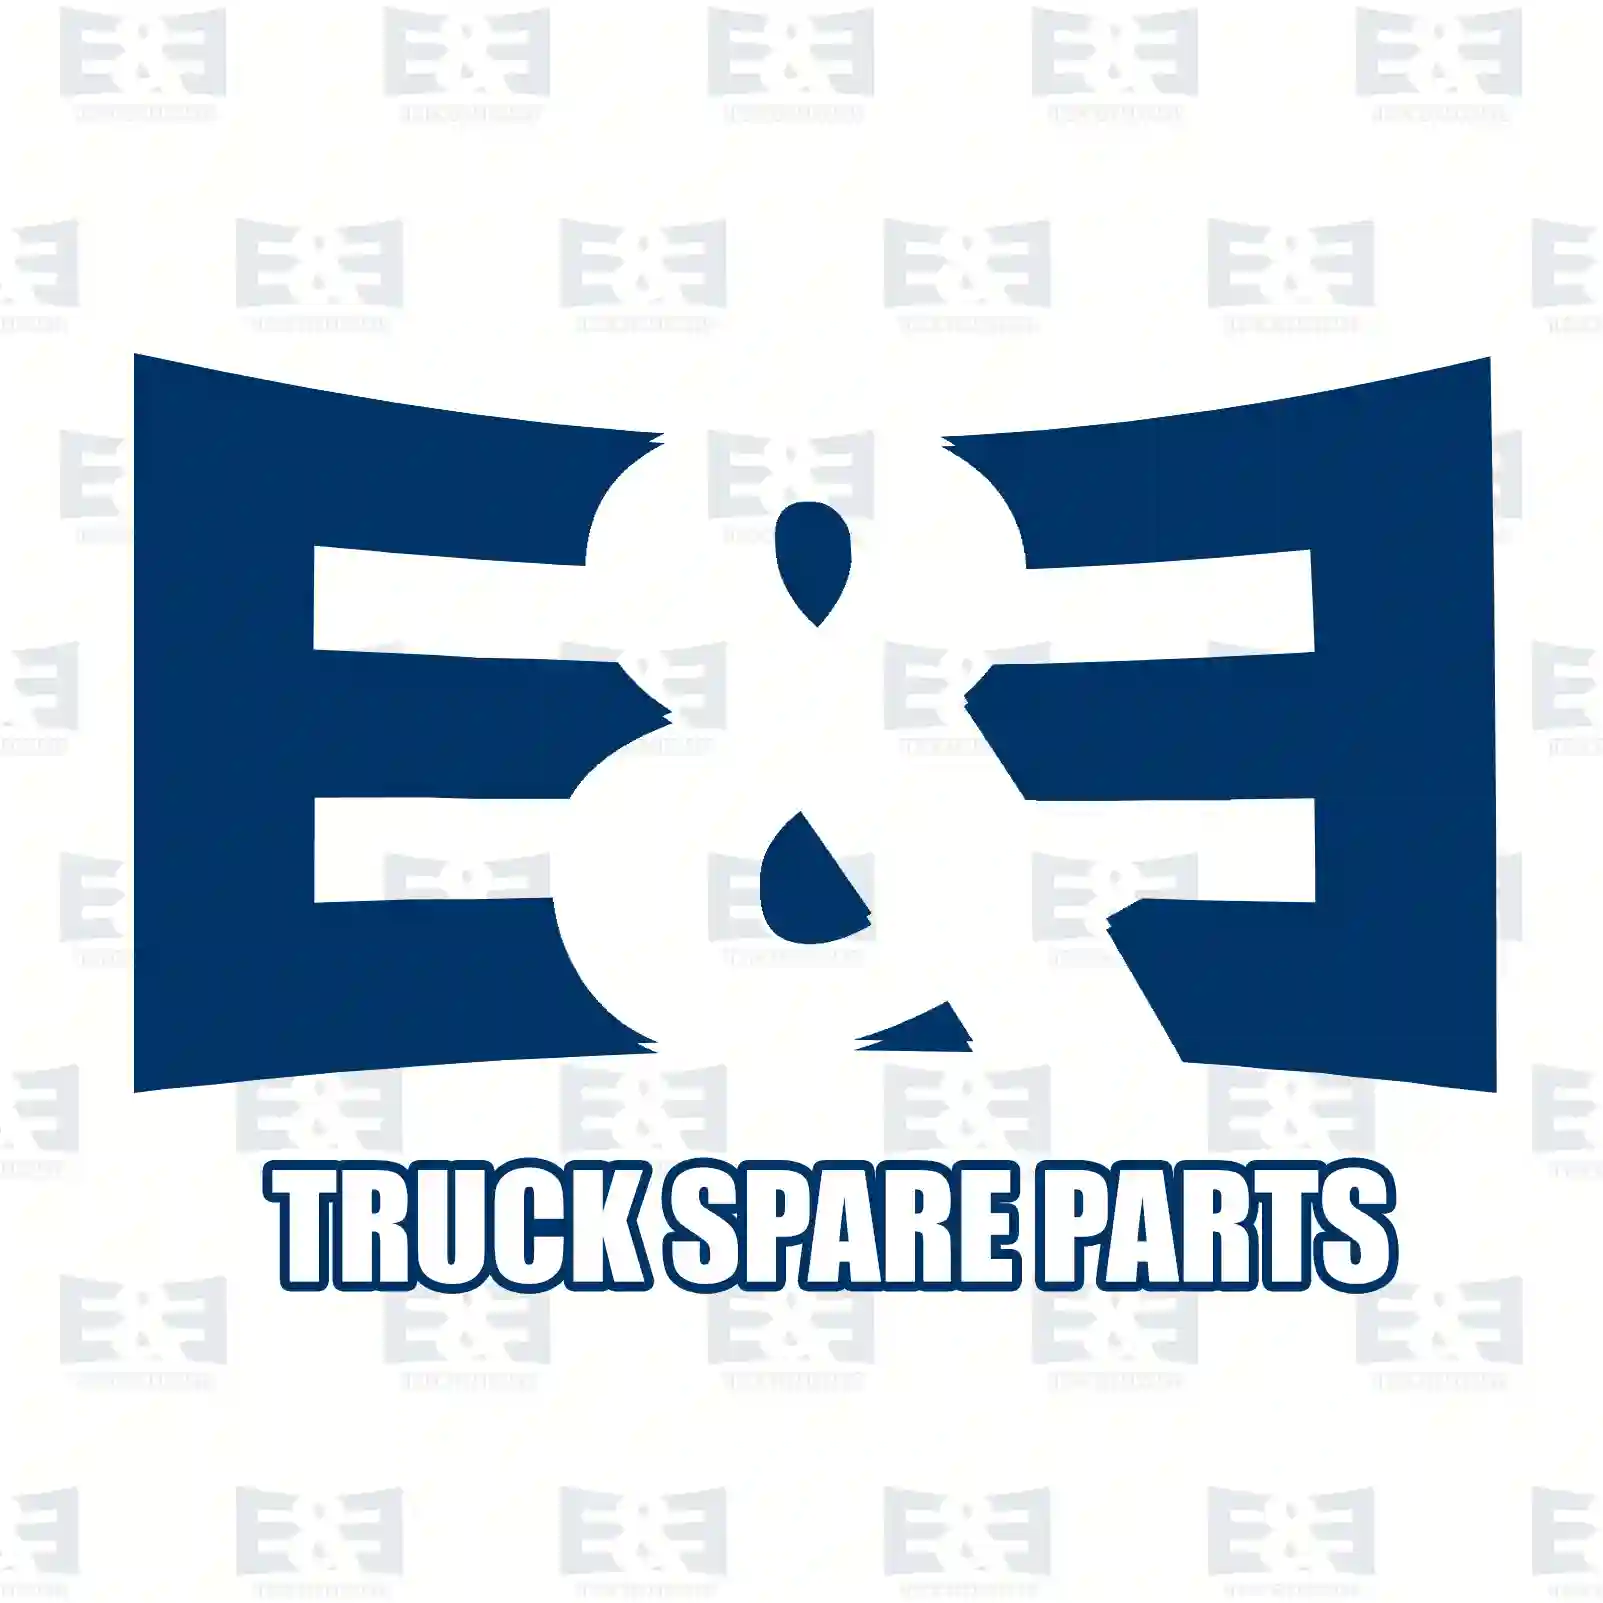 V-belt kit, 2E2286387, 1816444, 06580432227, 06580452227, 06580482227, 06580722272, 06580732272, 51968206009, 51968206017, 0039970592 ||  2E2286387 E&E Truck Spare Parts | Truck Spare Parts, Auotomotive Spare Parts V-belt kit, 2E2286387, 1816444, 06580432227, 06580452227, 06580482227, 06580722272, 06580732272, 51968206009, 51968206017, 0039970592 ||  2E2286387 E&E Truck Spare Parts | Truck Spare Parts, Auotomotive Spare Parts